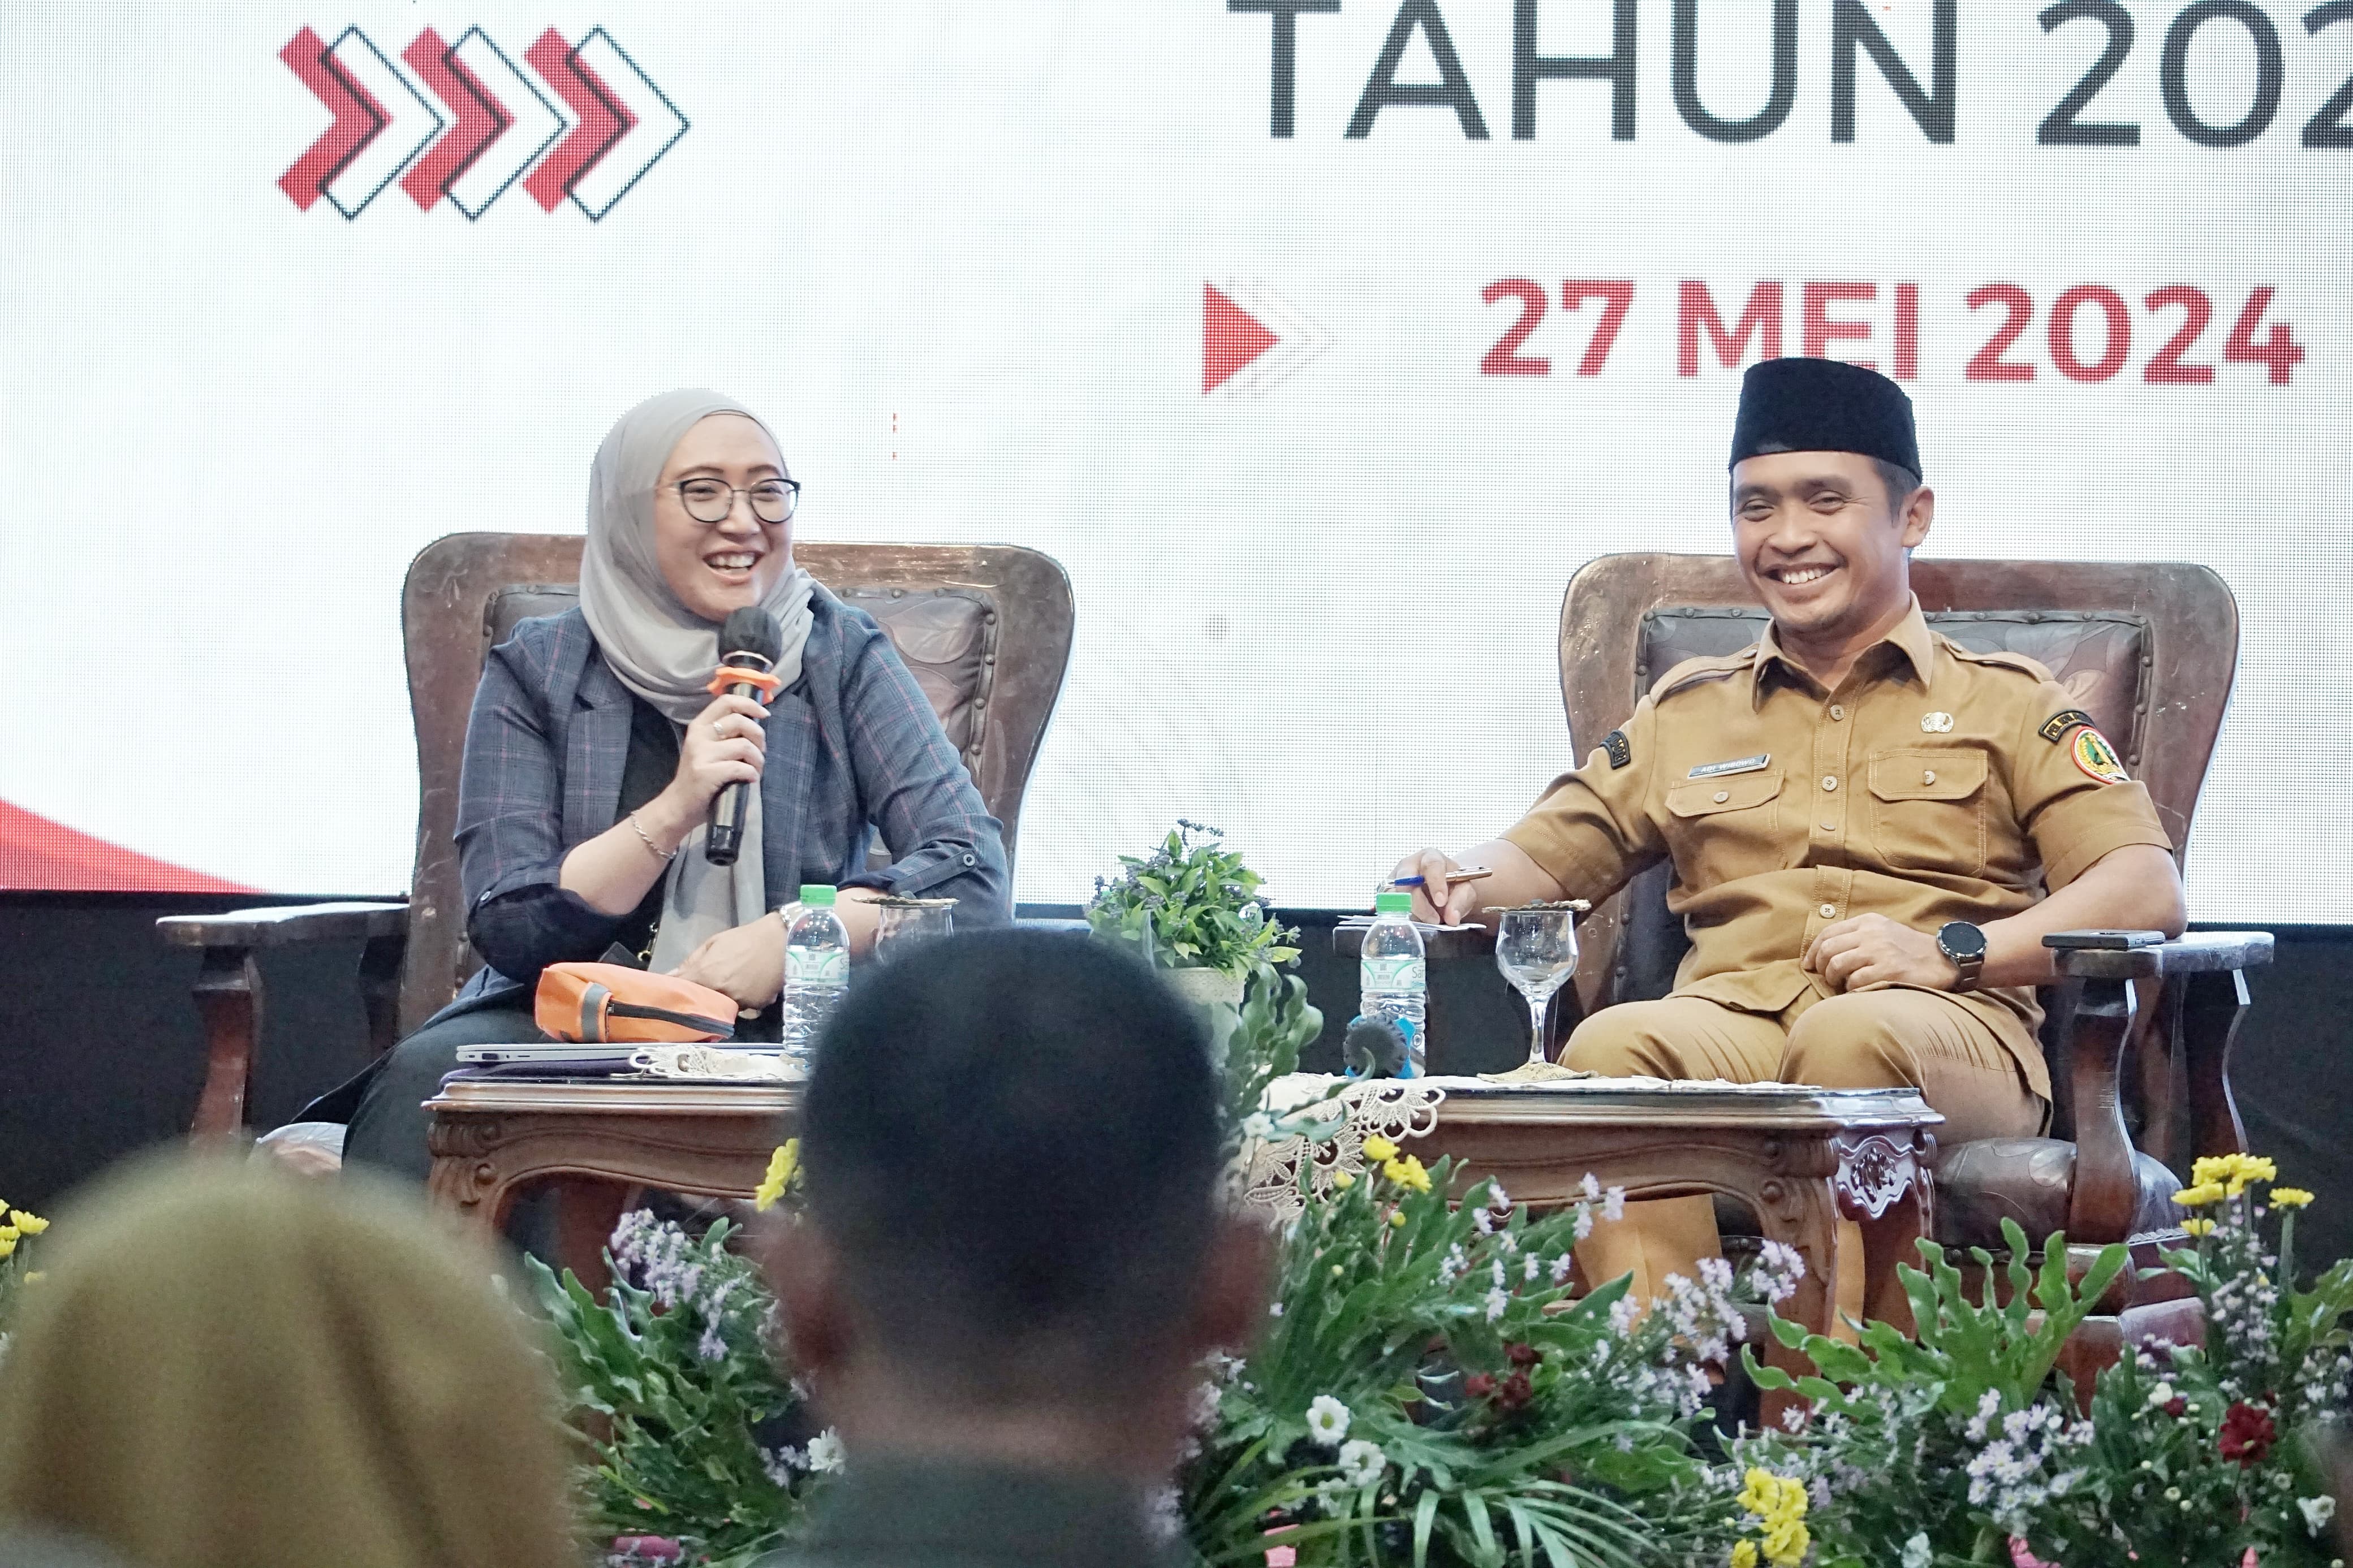 Nilai MCP Kota Pasuruan 95,55, Raih Ranking Ke-3 se-Jawa Timur